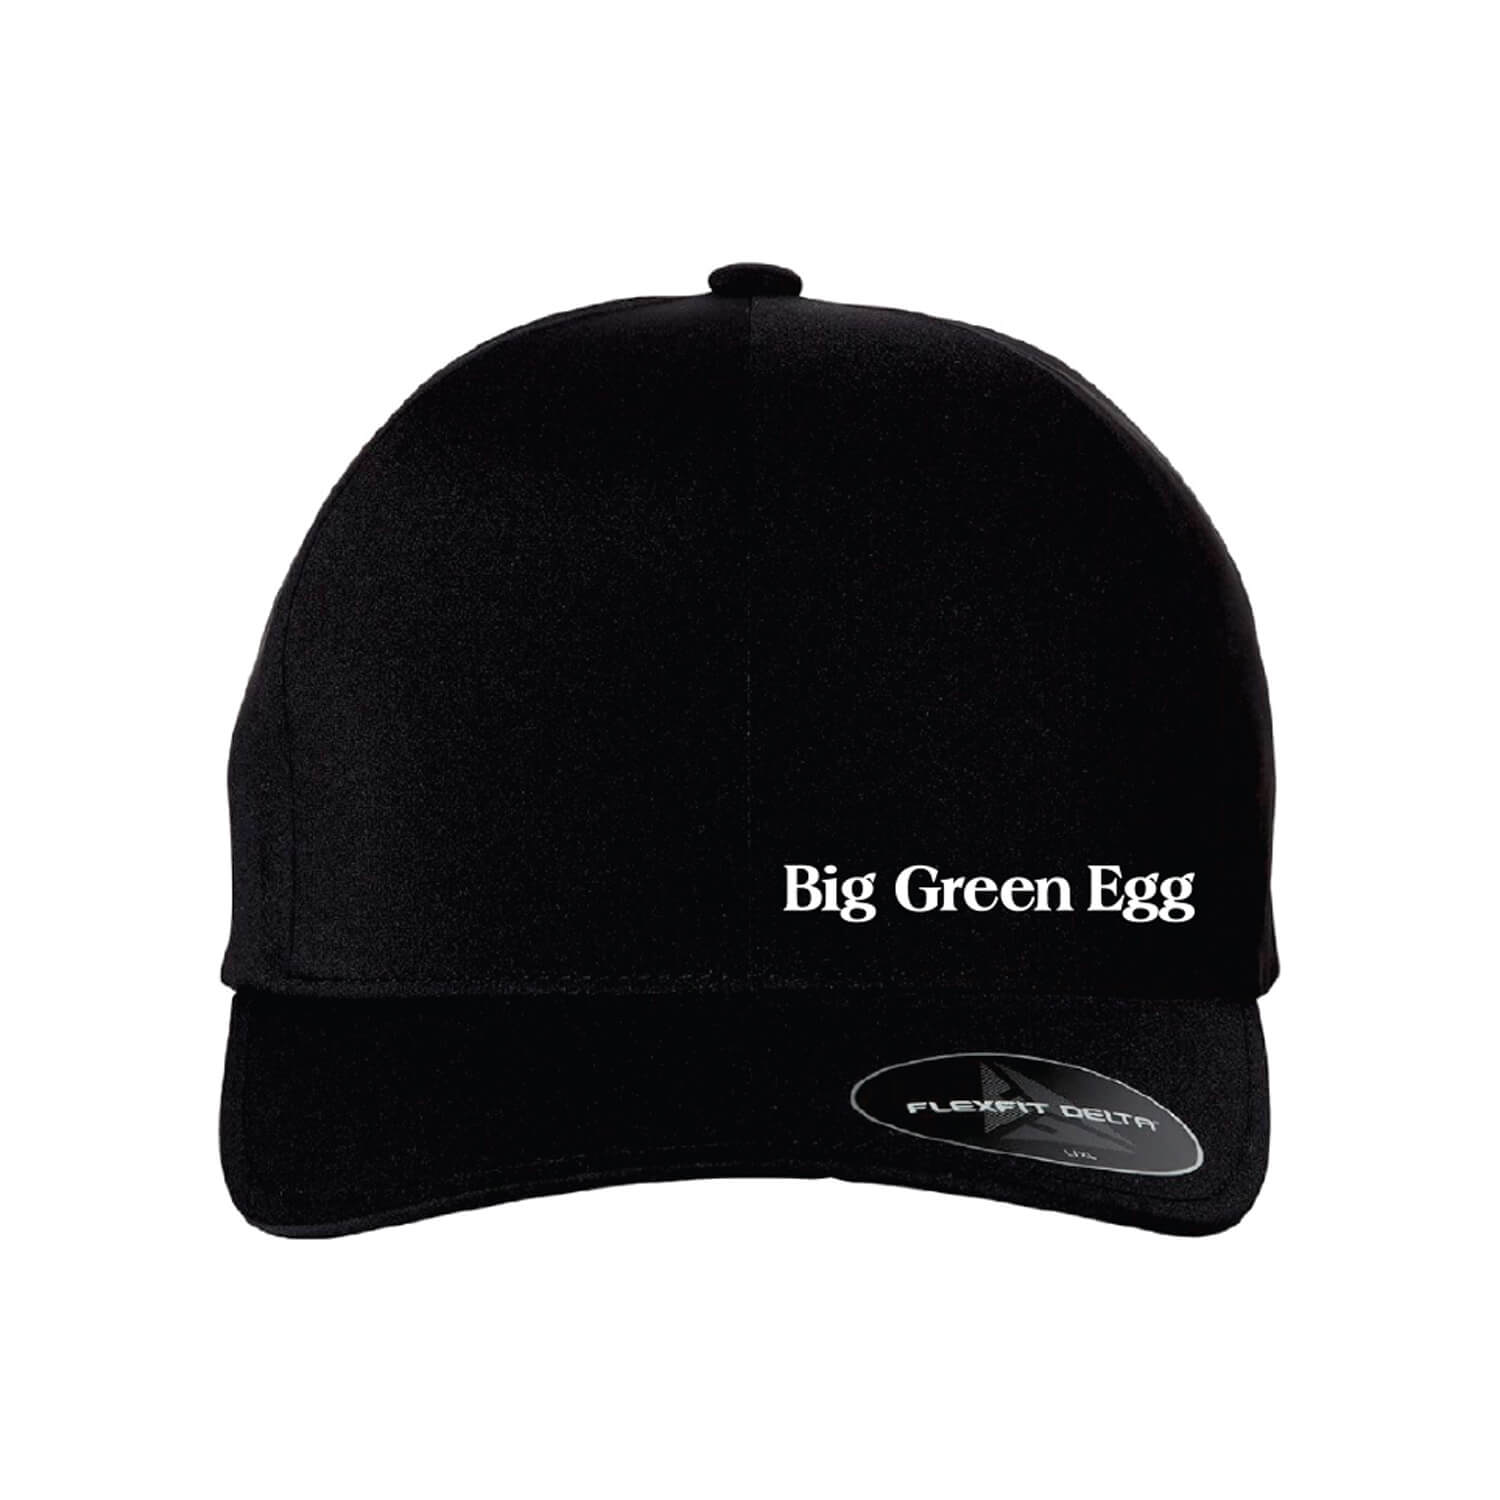 BGE Black Flexfit Cap